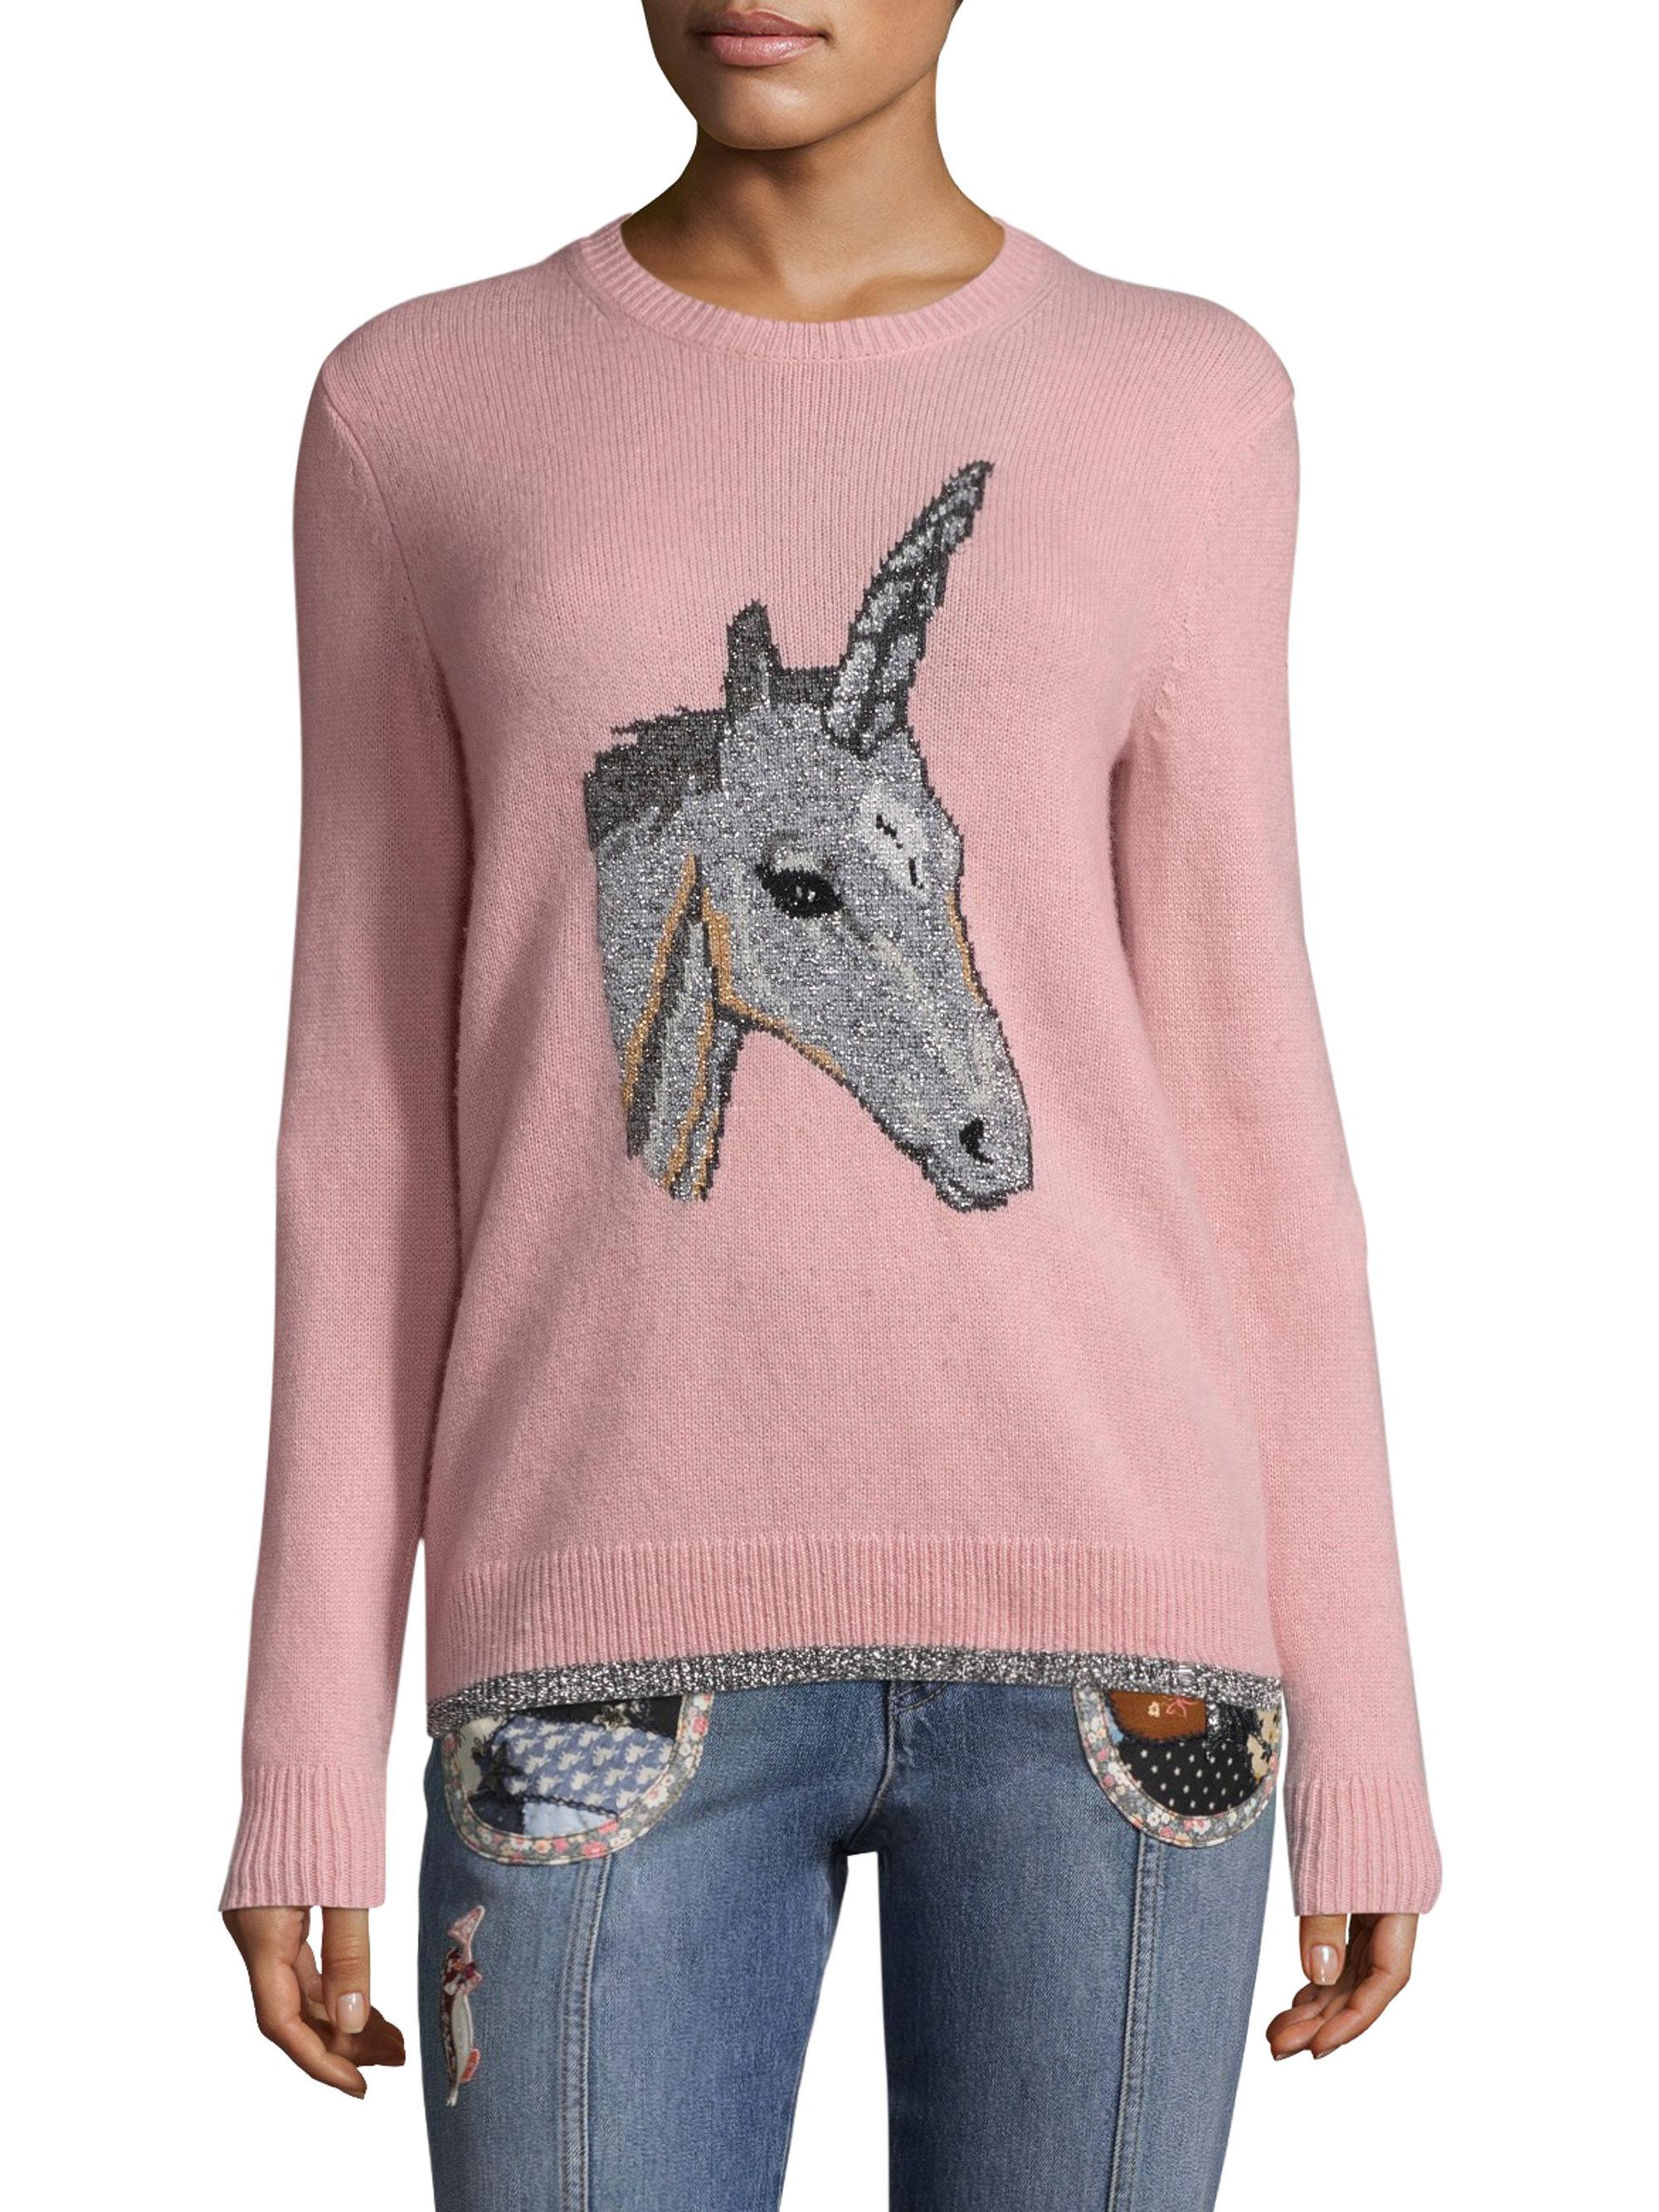 COACH Cashmere Unicorn Intarsia Sweater in Pink - Lyst